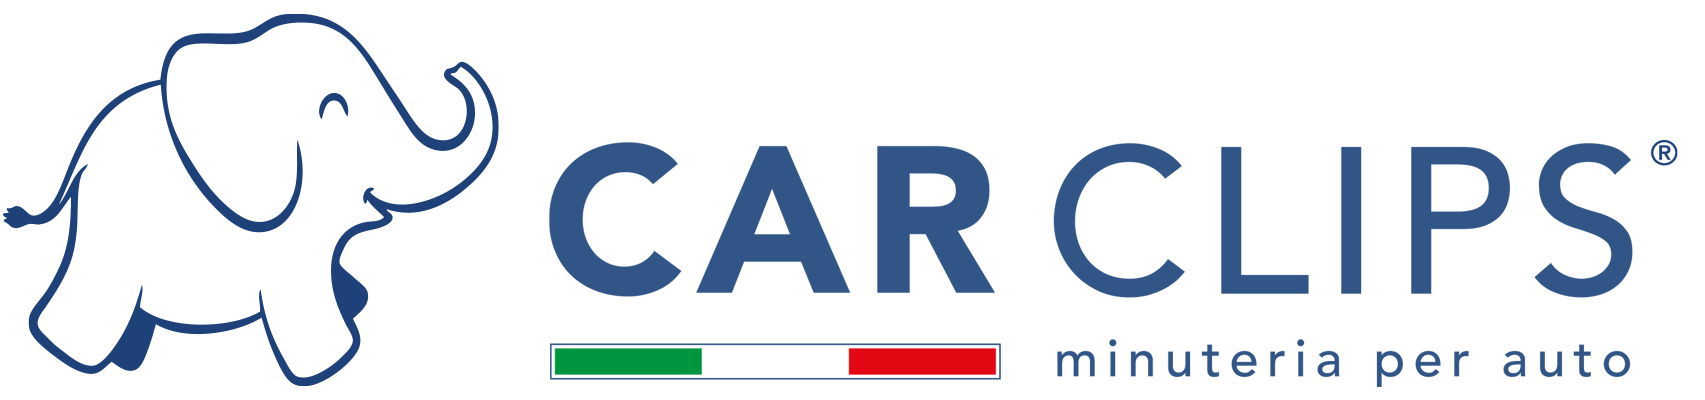 Car clips logo